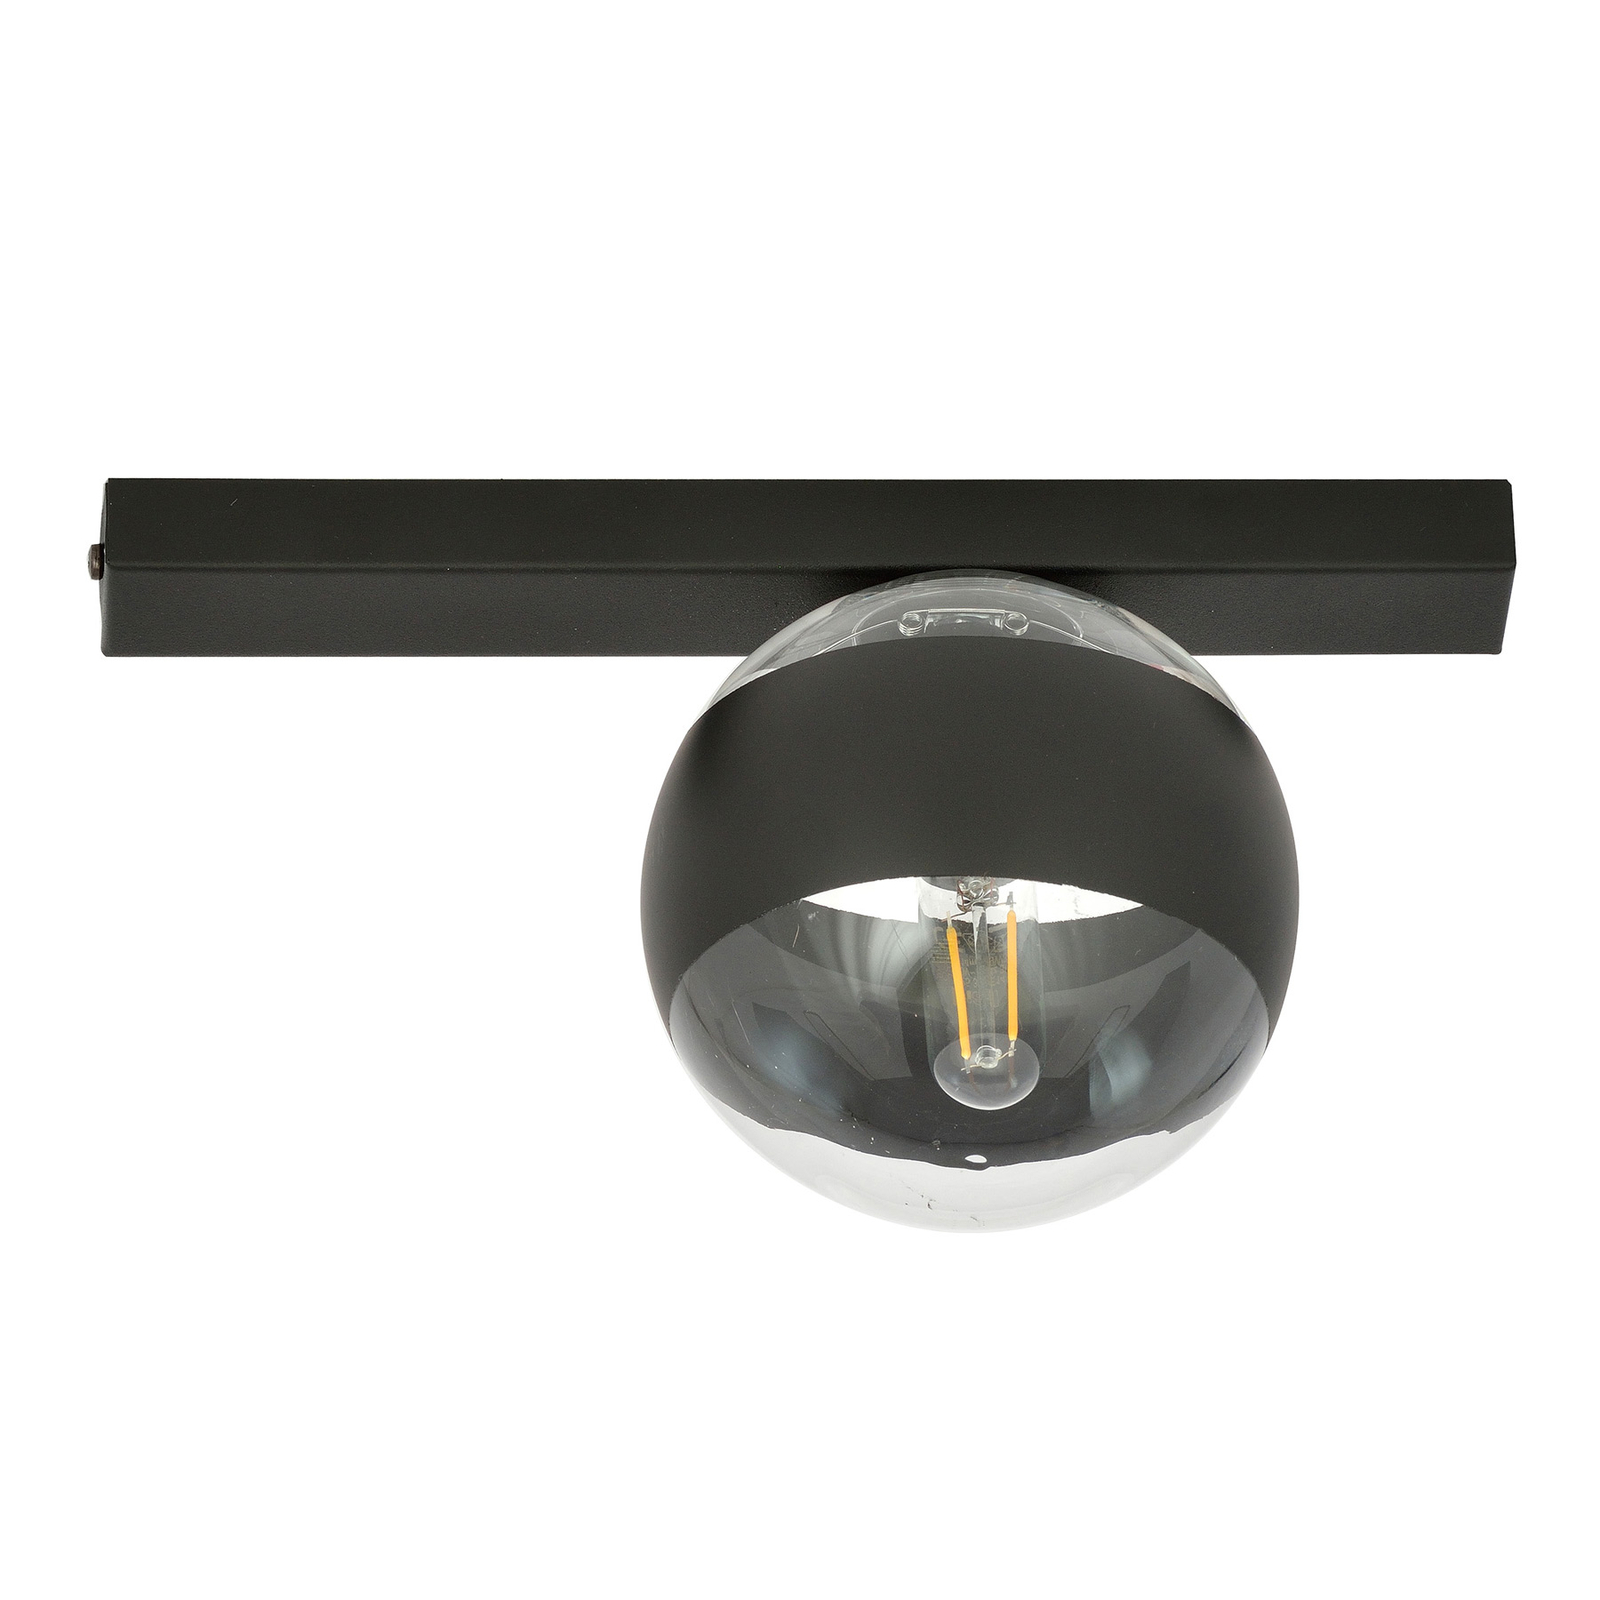 Lineaire plafondlamp, zwart/helder, 1-lamp